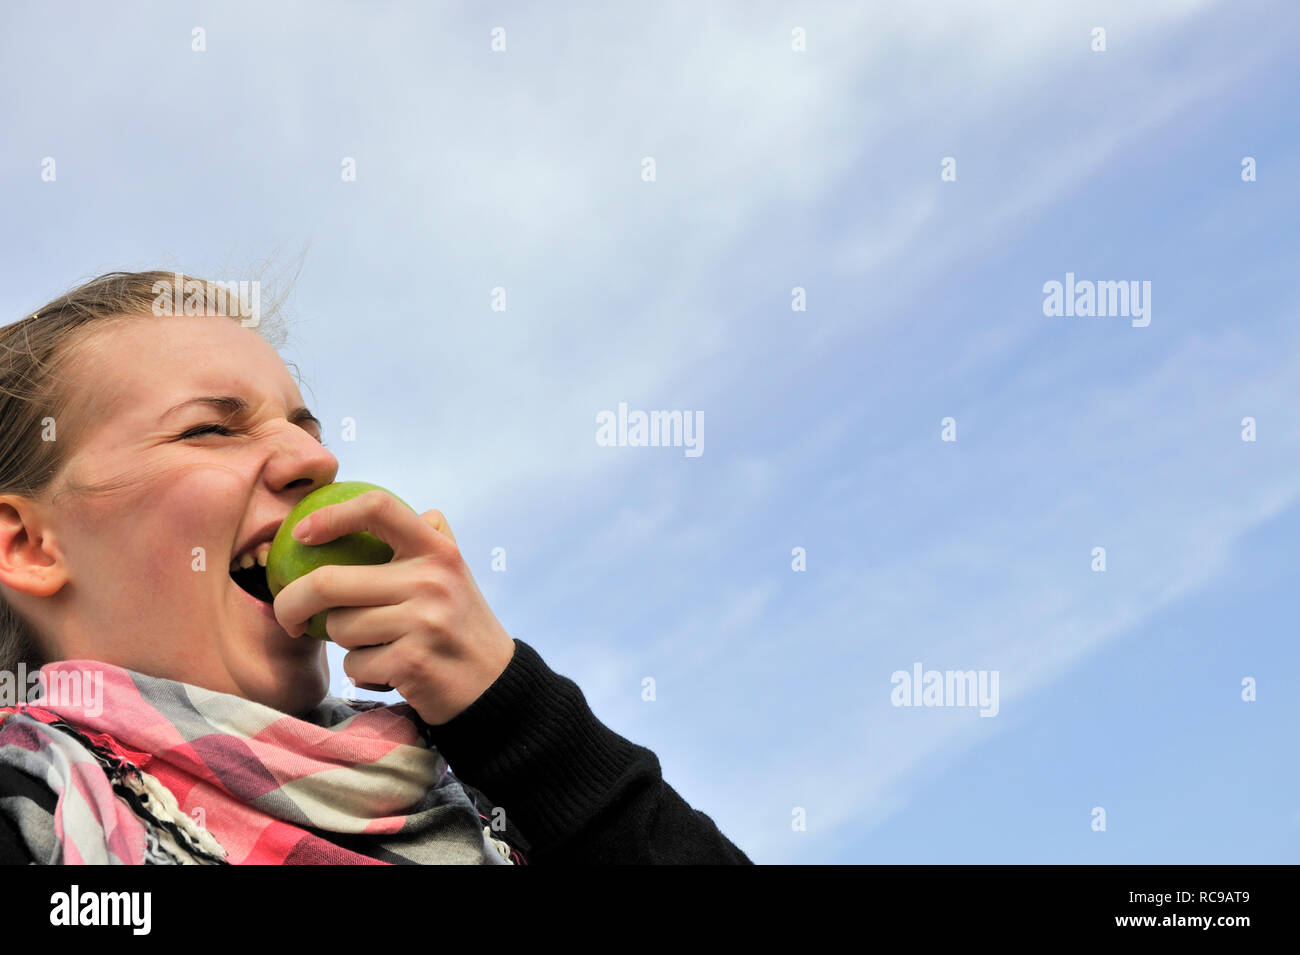 Frau Junge beisst en einen grünen Apfel - in den Apfel beissen sauren | joven comiendo una manzana verde - para tragar una píldora amarga o sujete la natt Foto de stock